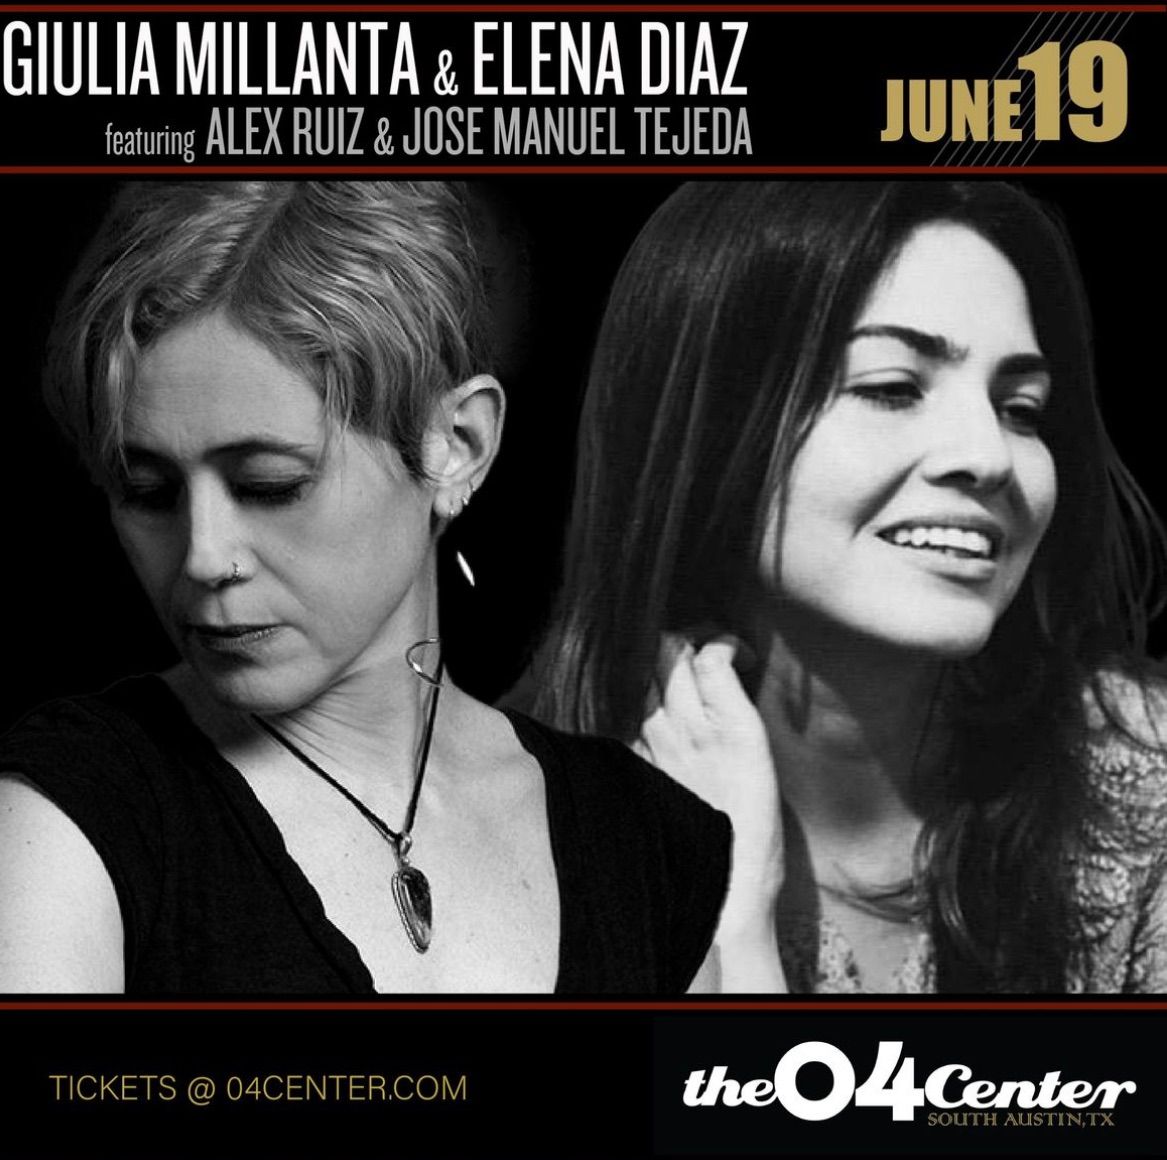 Giulia Millanta and Elena Diaz featuring Alex Ruiz & Jose Tejeda